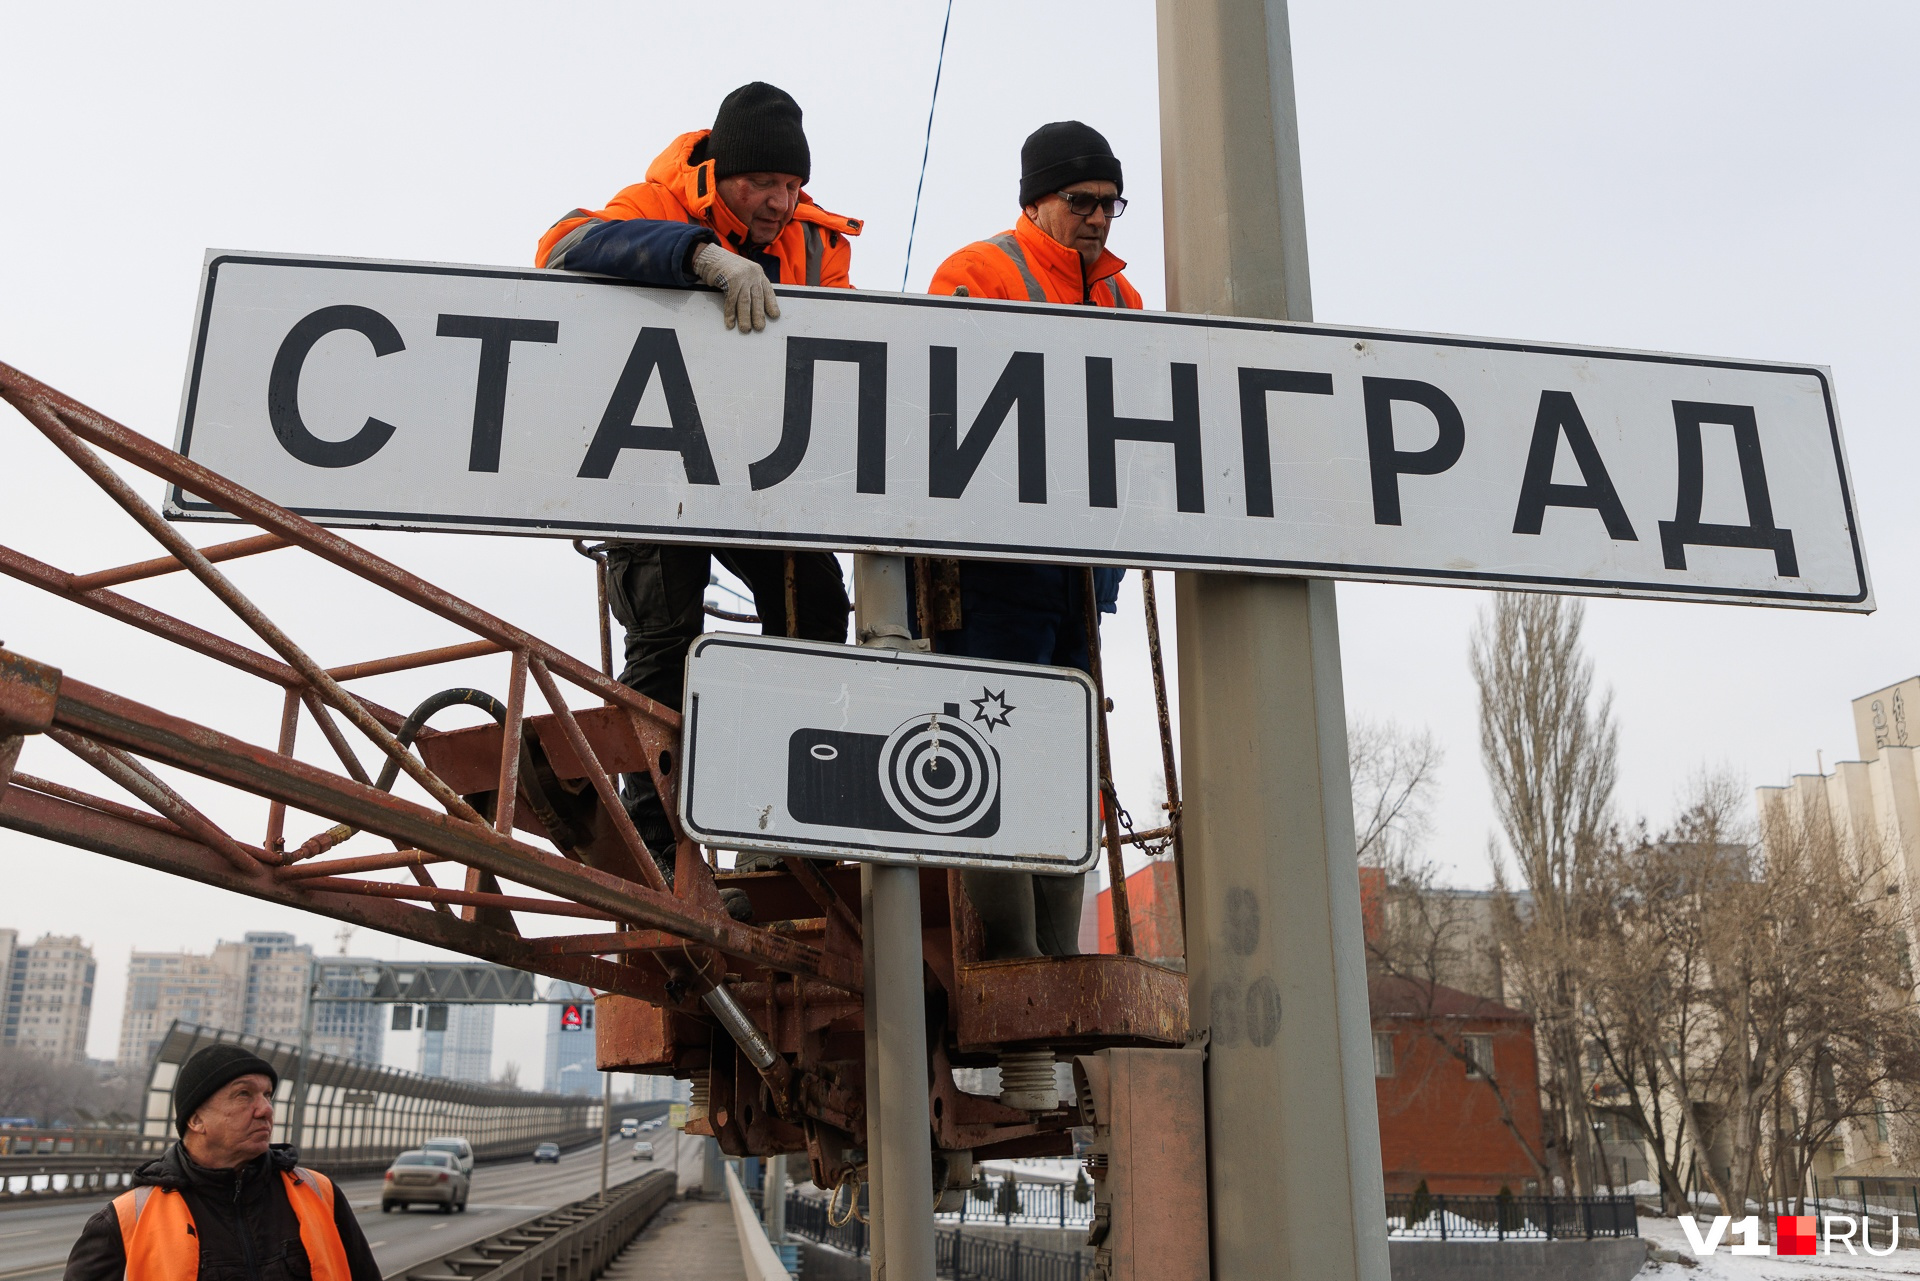 В момент атаки БПЛА на табличках на въезде в город висела надпись «Сталинград»